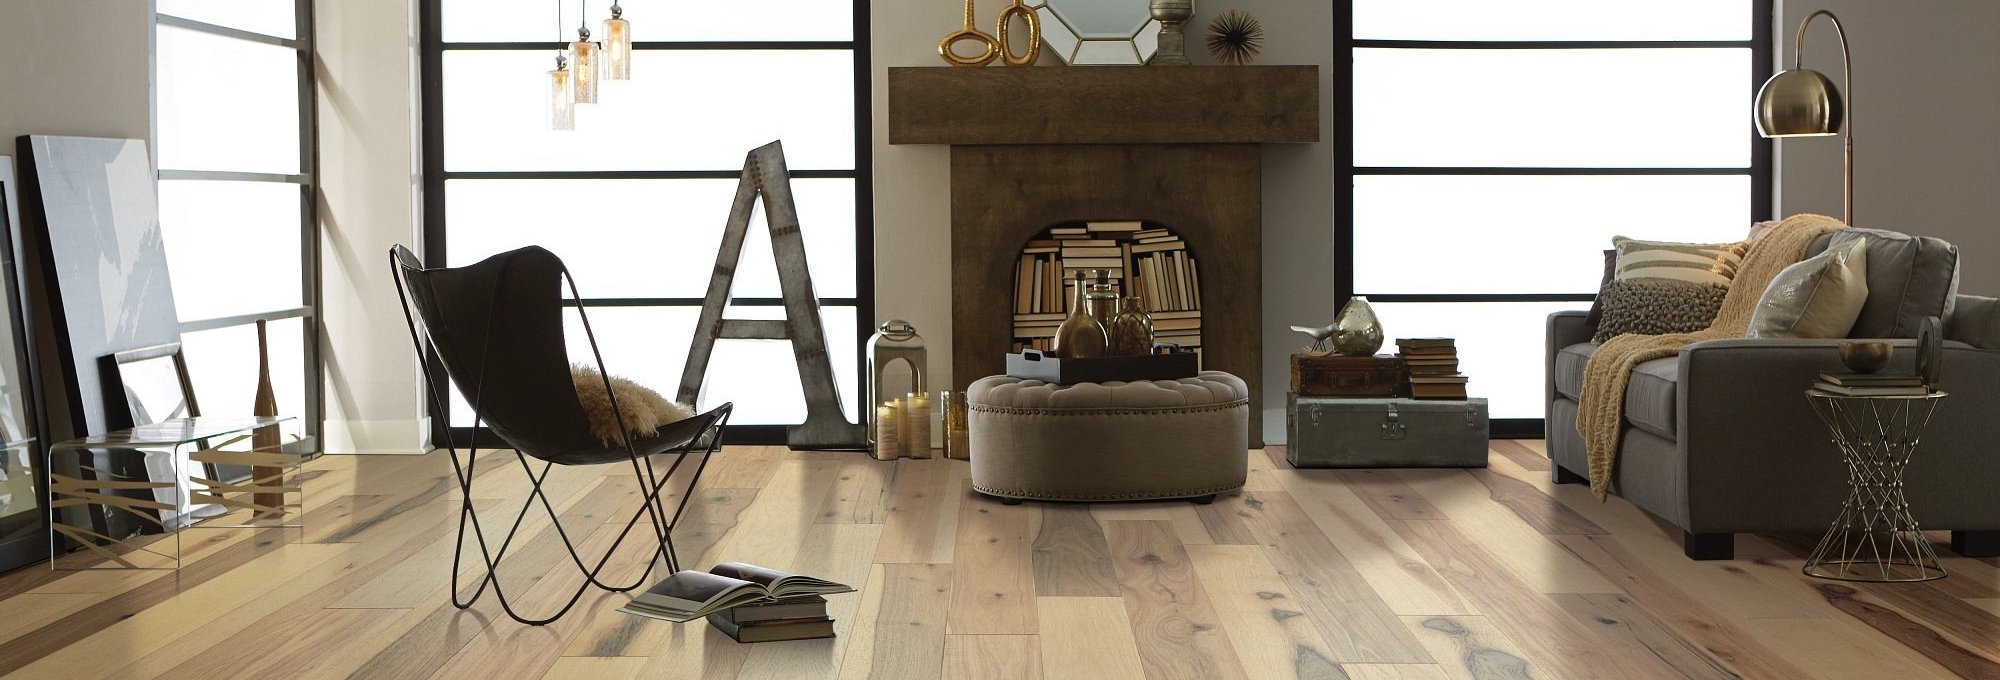 living room with hardwood floor from Solutions in West Fargo